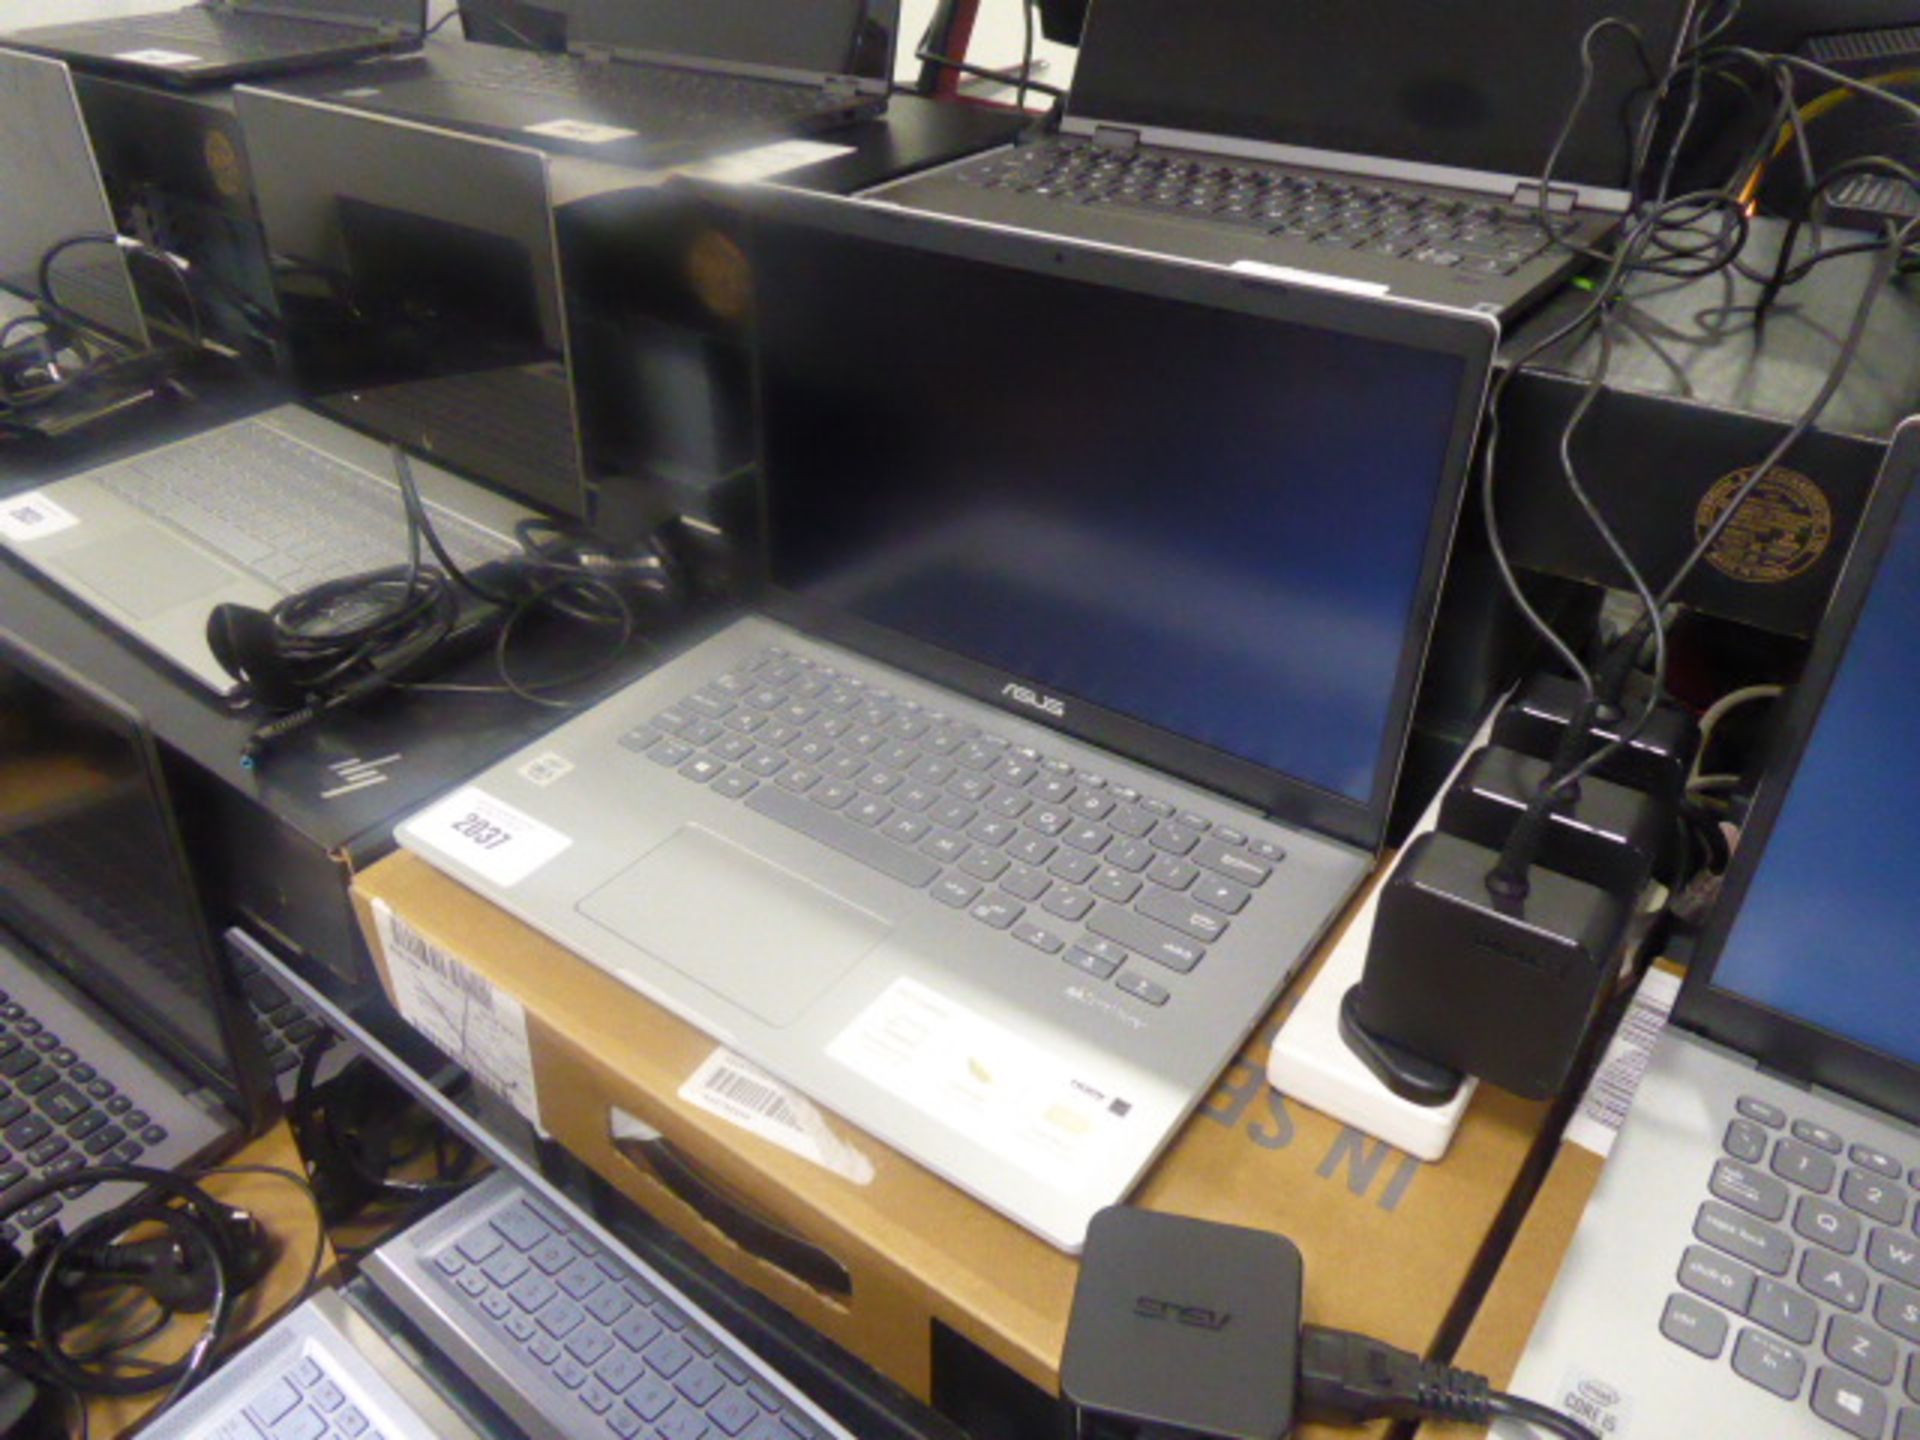 Asus laptop model X409J intel i5 10th gen processor, 8gb ram , 256gb ssd, Windows 10 installed, with